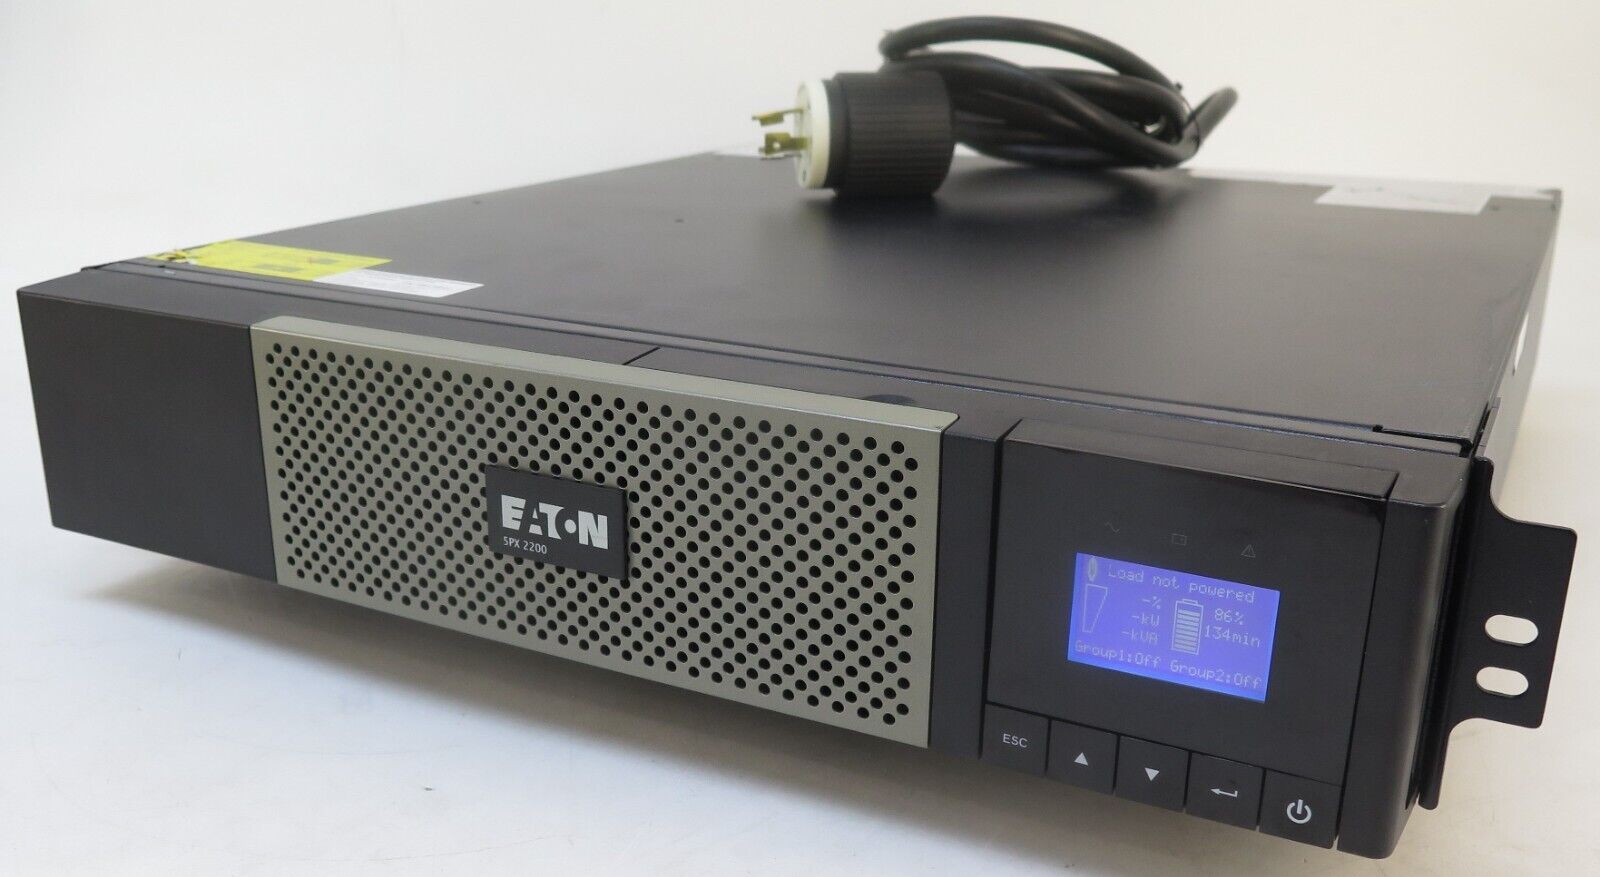 Eaton 5PX 2200 UPS 5PX2200RT 1950VA, 1920W, 5-20P input, Outputs: (8) 5-20R